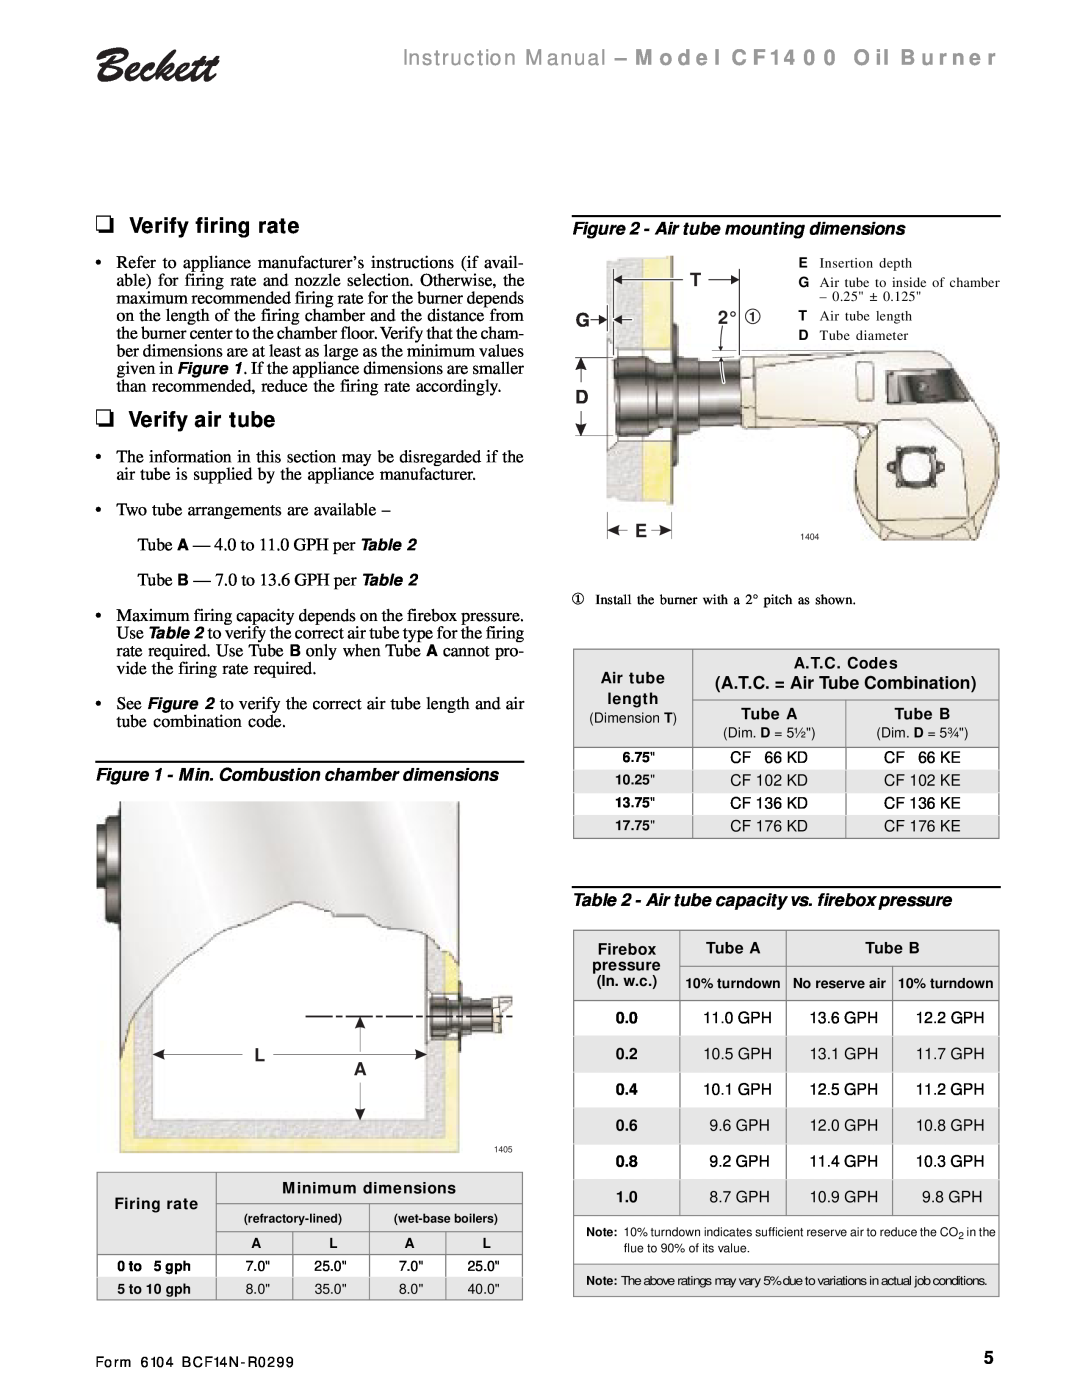 Beckett CF 1400 Verify firing rate, Verify air tube, Air tube mounting dimensions, Min. Combustion chamber dimensions 